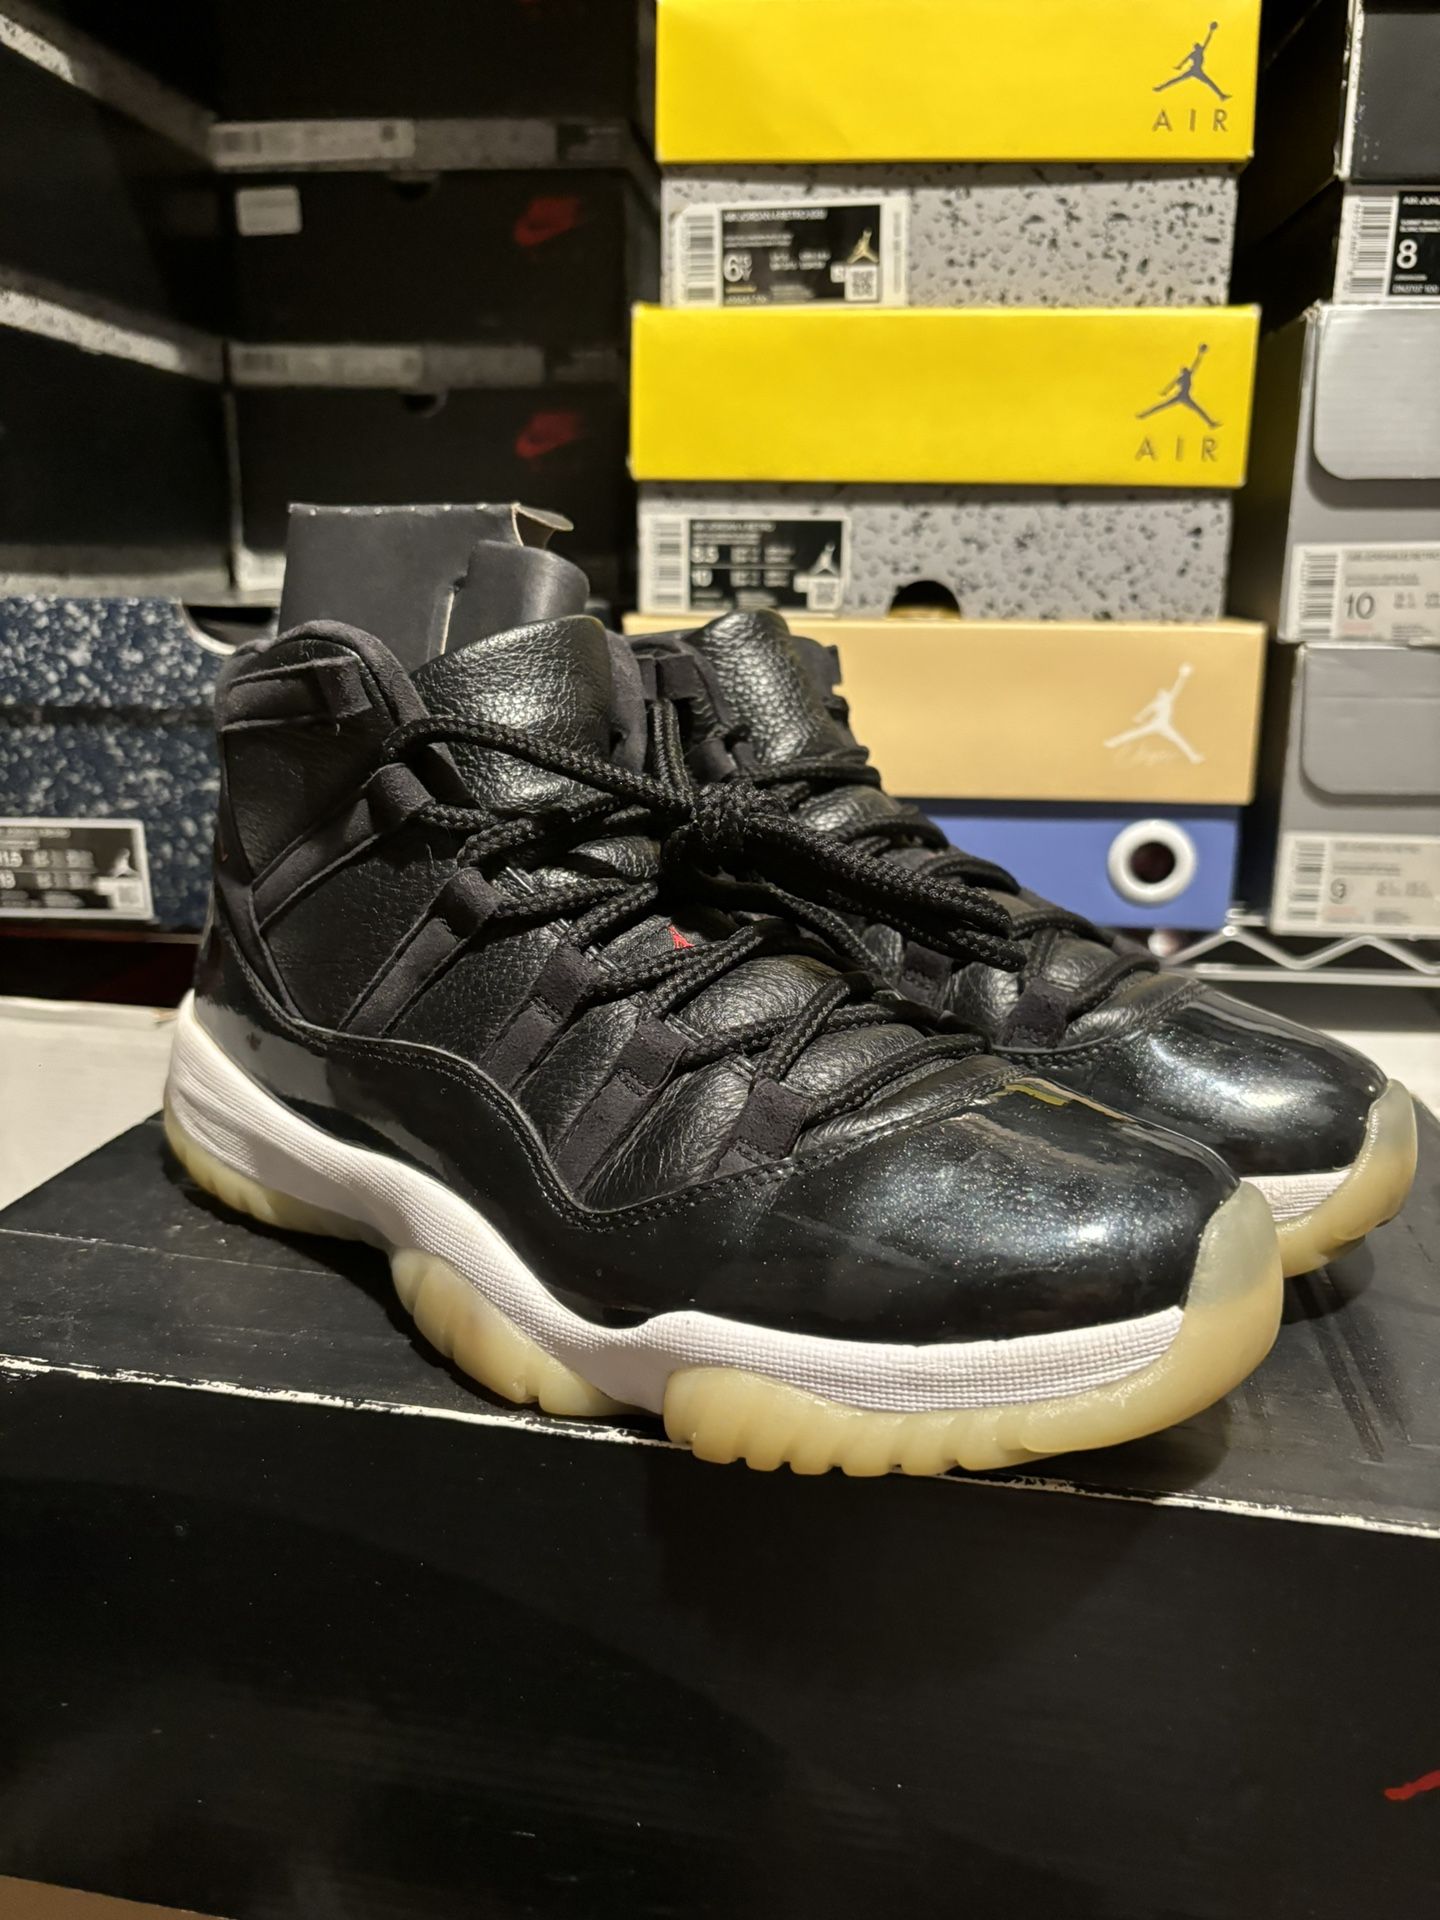 Jordan 11 Black High Size 9